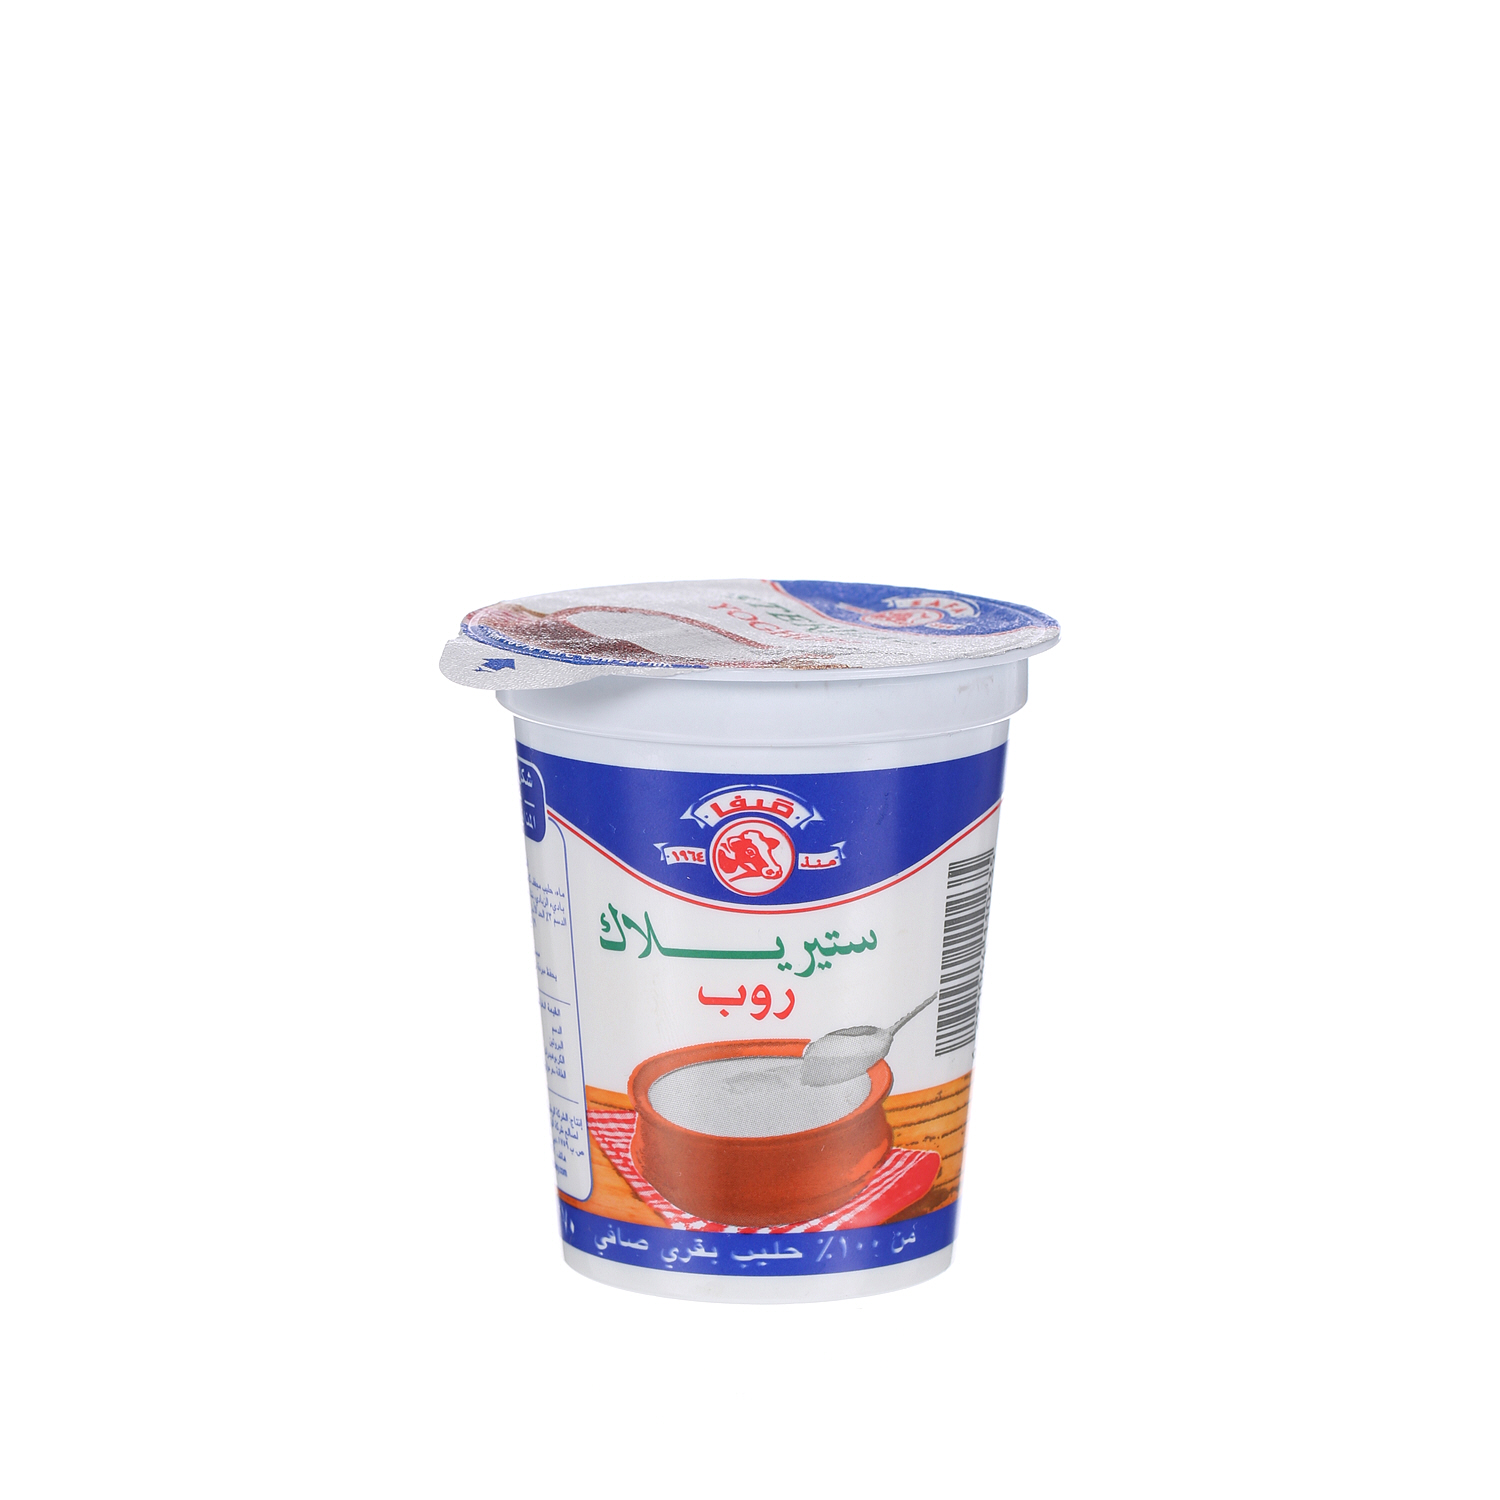 Safa Sterilac Fresh Yoghurt Full Fat 170gm